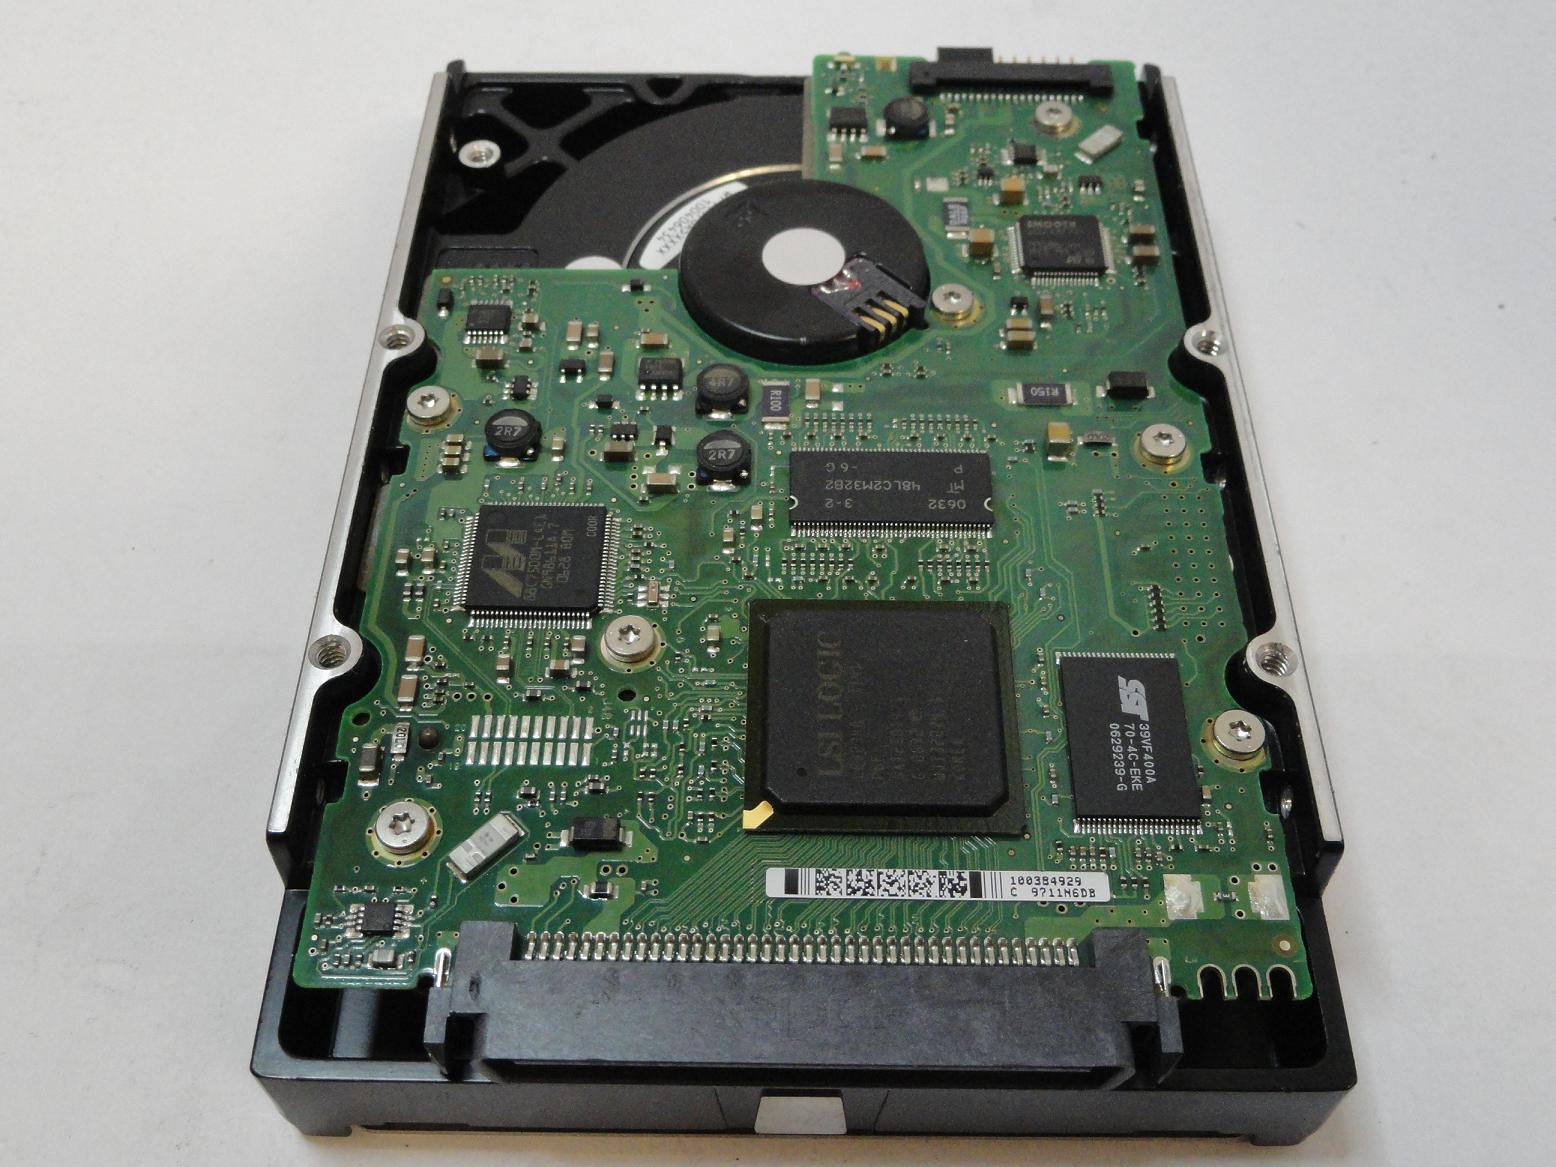 PR25705_9X4006-105_Seagate 146GB SCSI 80 Pin 15Krpm 3.5in HDD - Image2